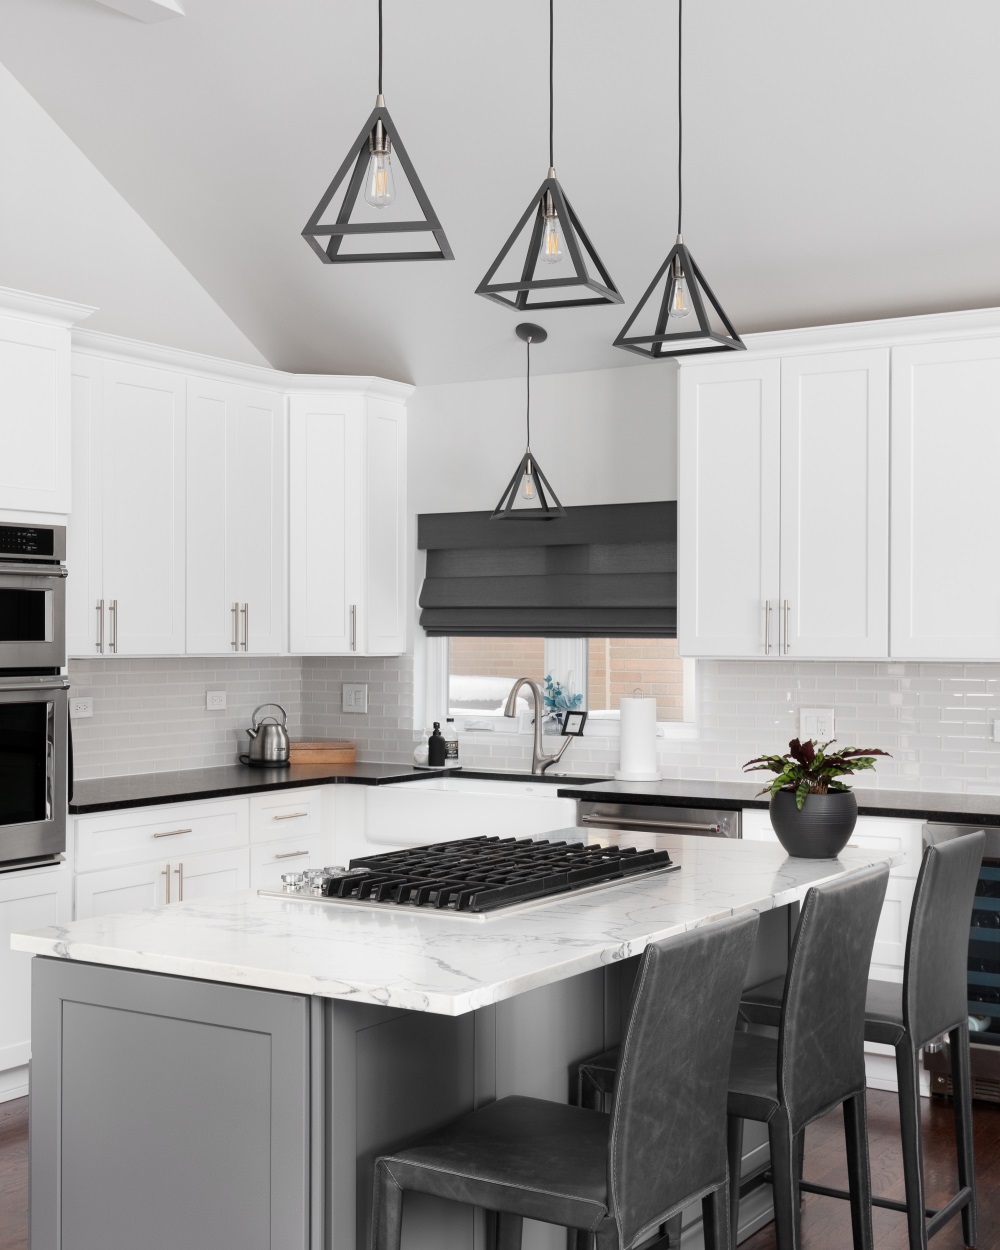 Design with tiles 1 - White modern kitchen